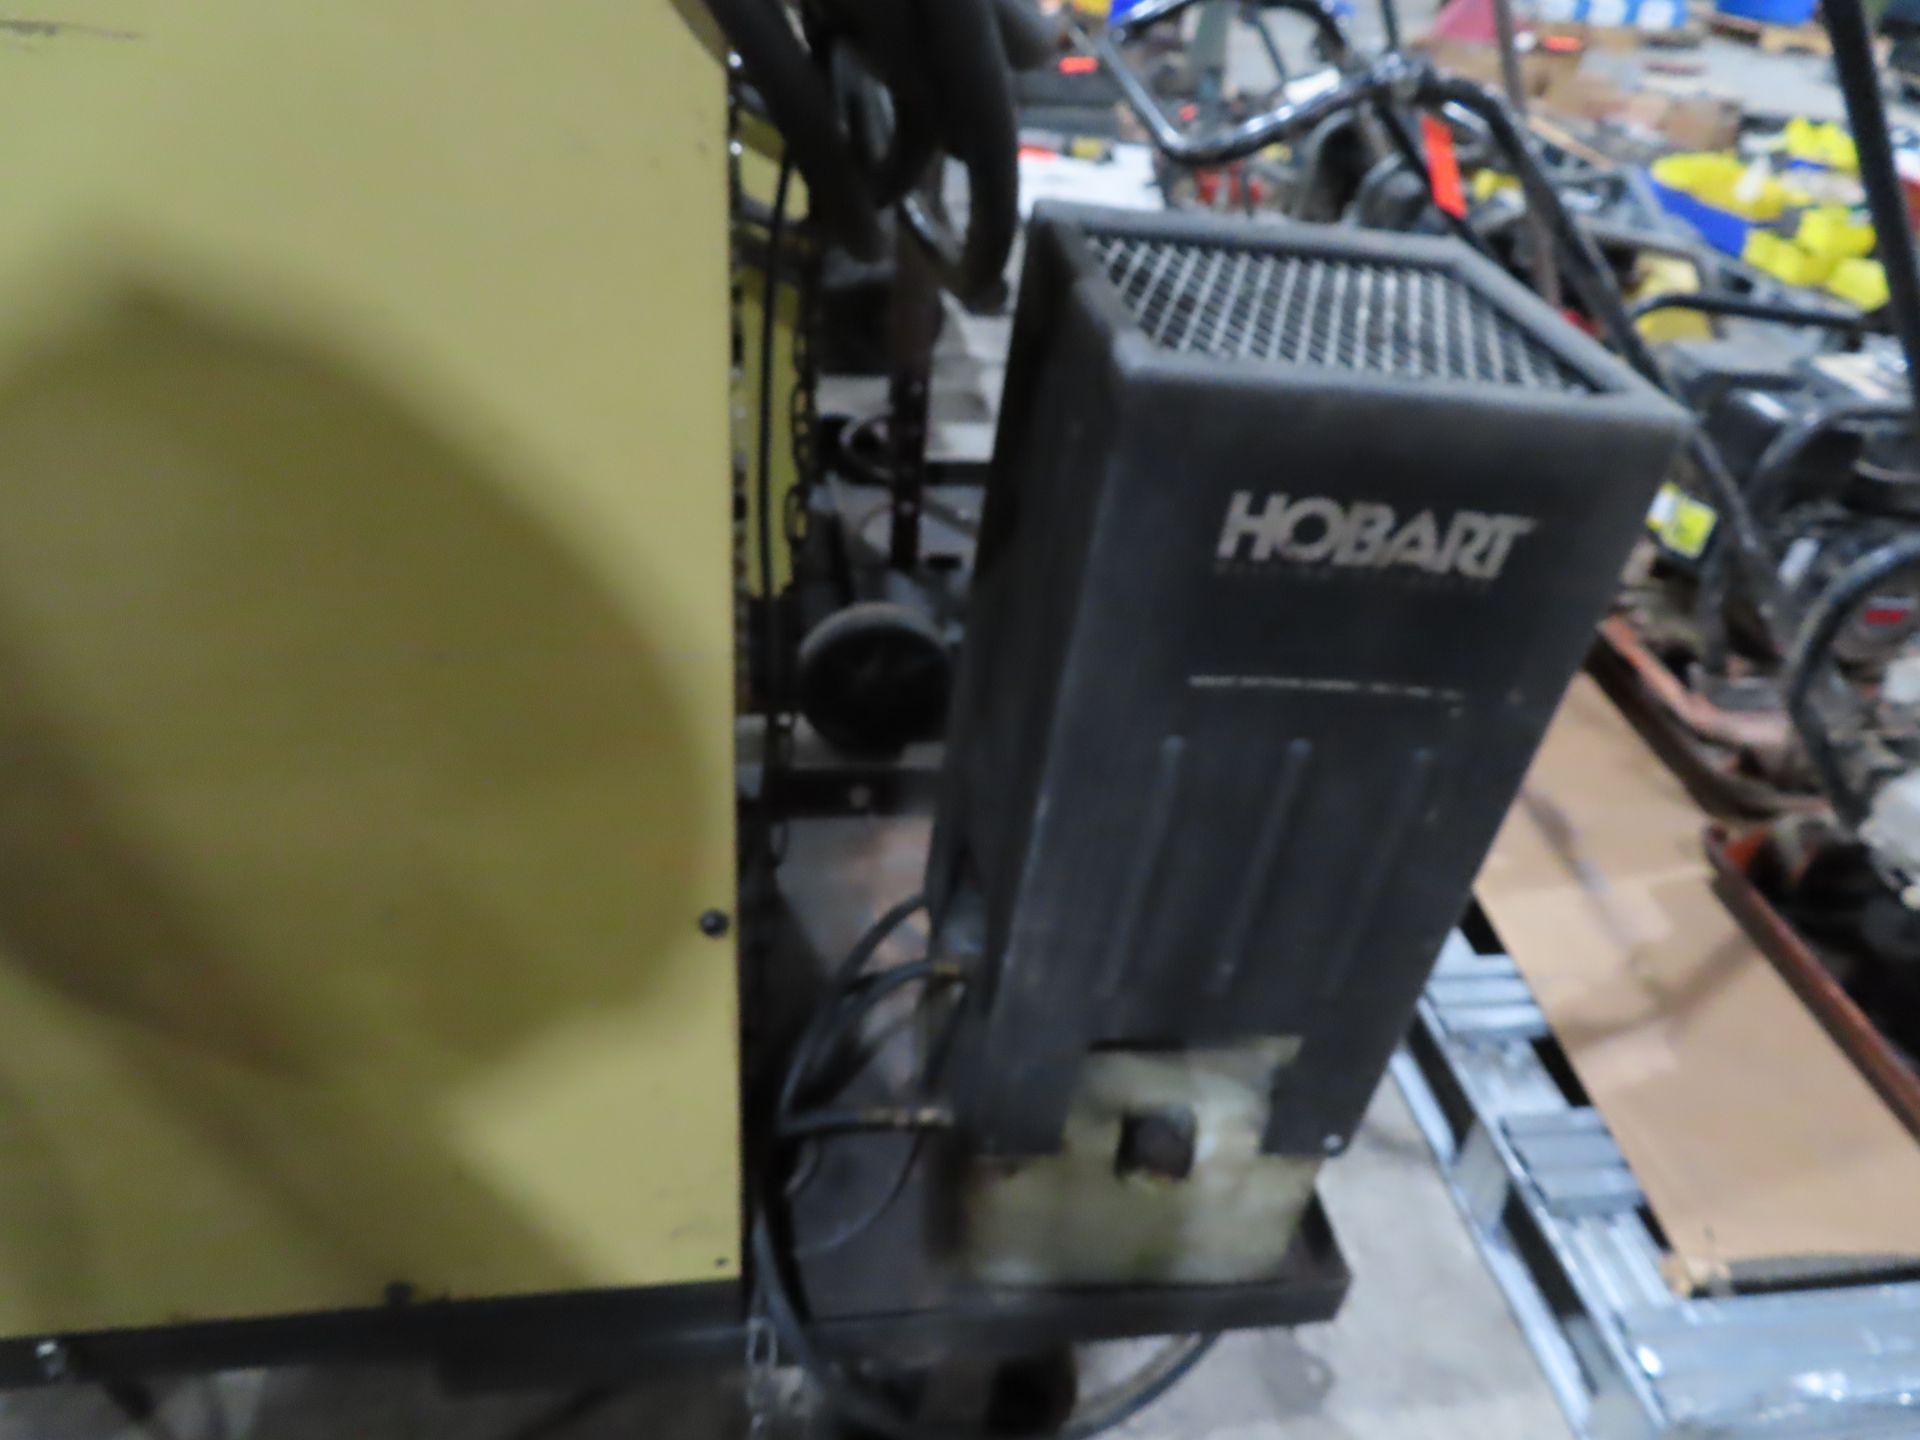 Hobart Tigwave 350 AC/DC tig welder. Includes gas gauge, Hobart chiller, leads and foot pedal. - Image 4 of 5